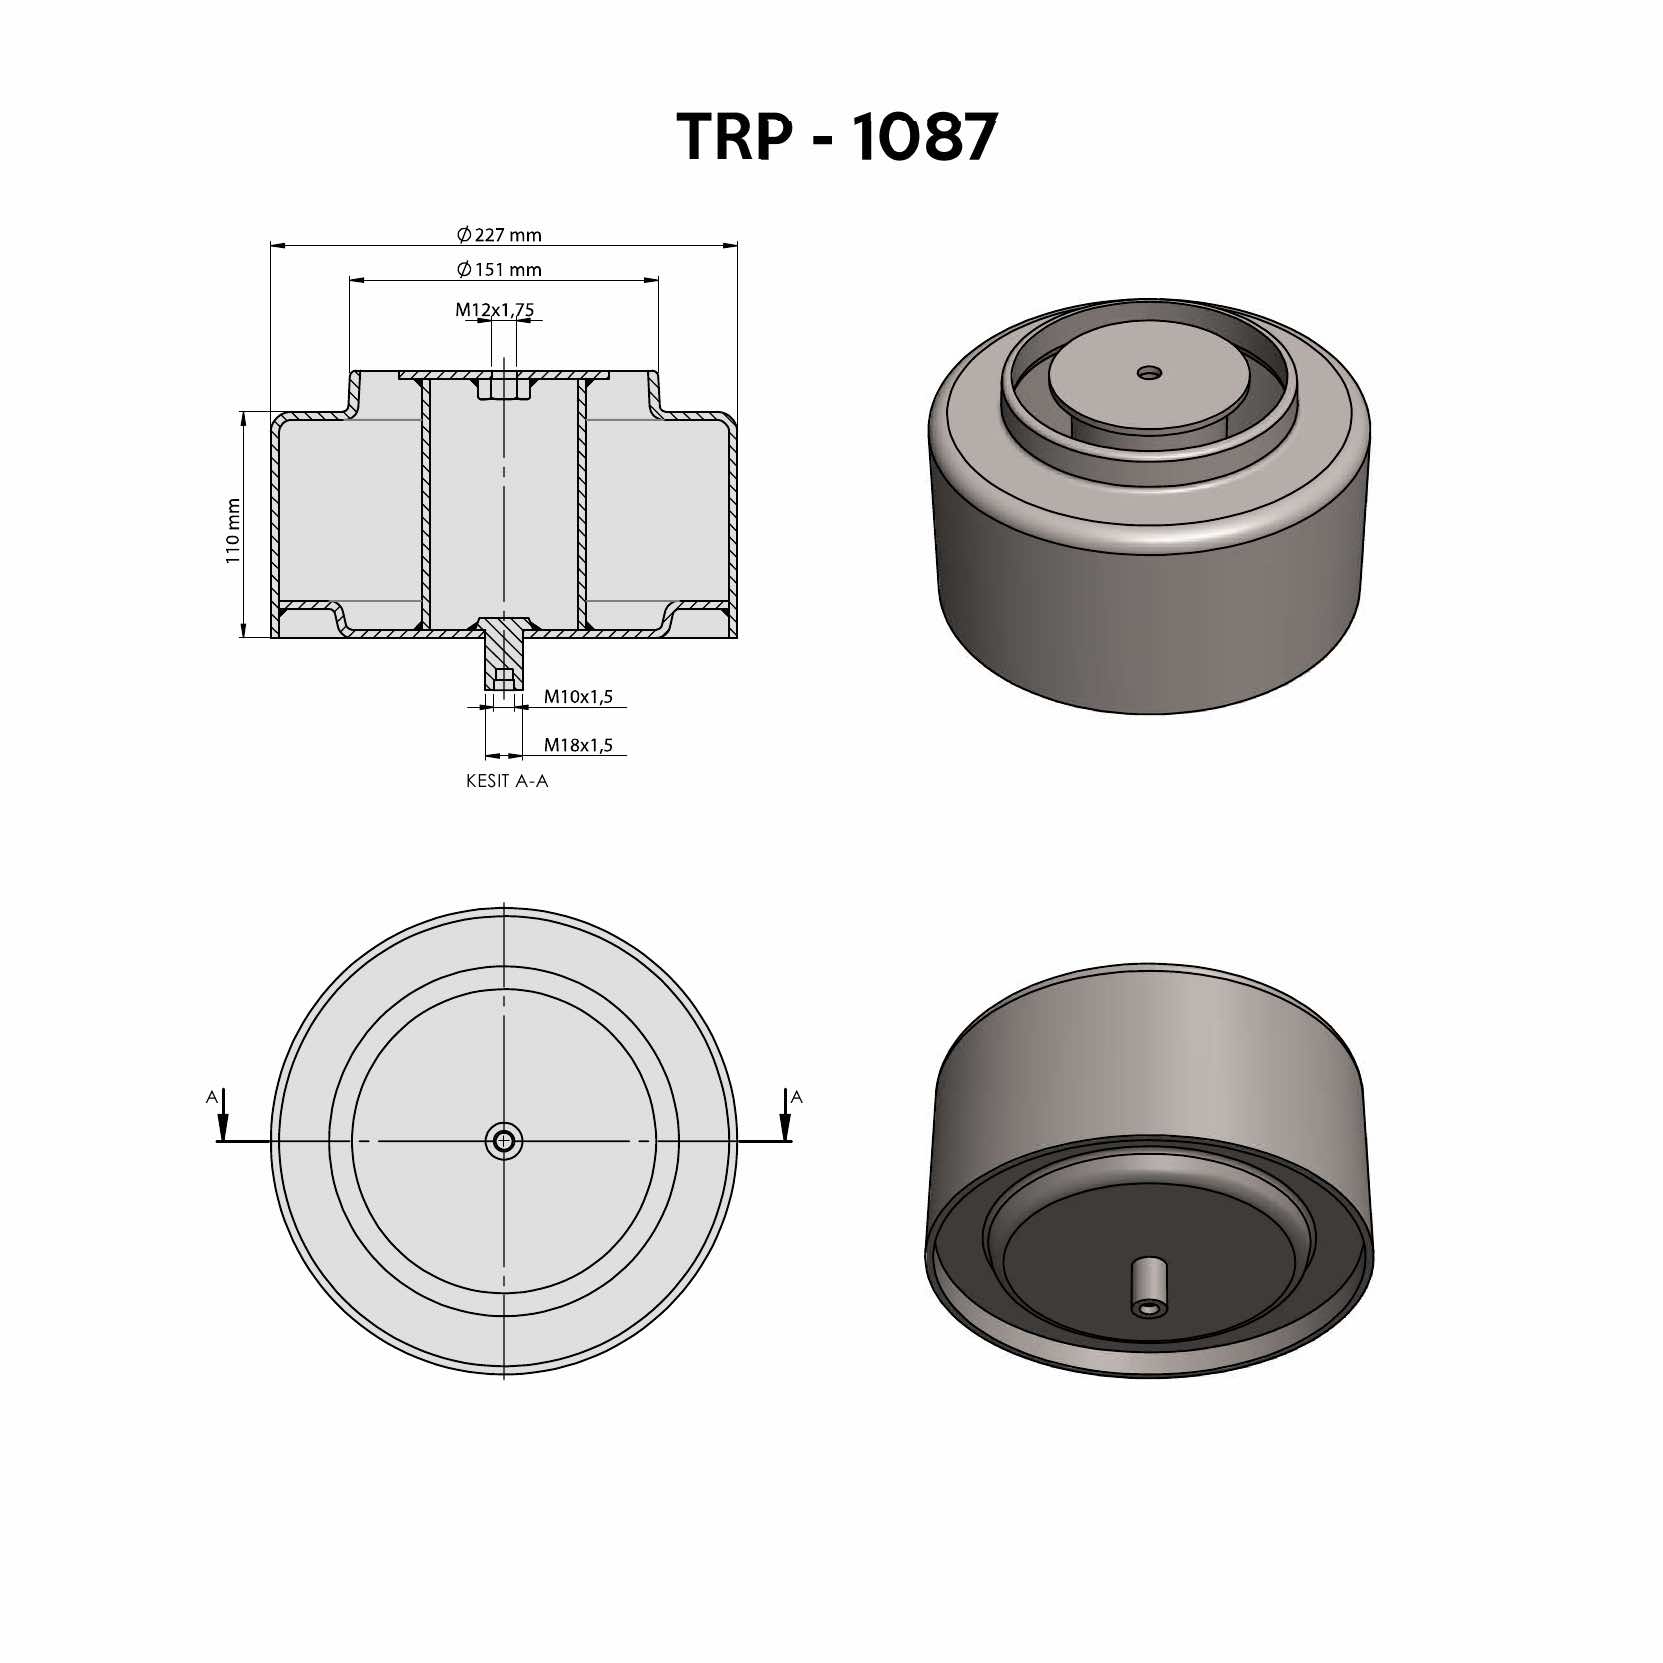 TRP-1087